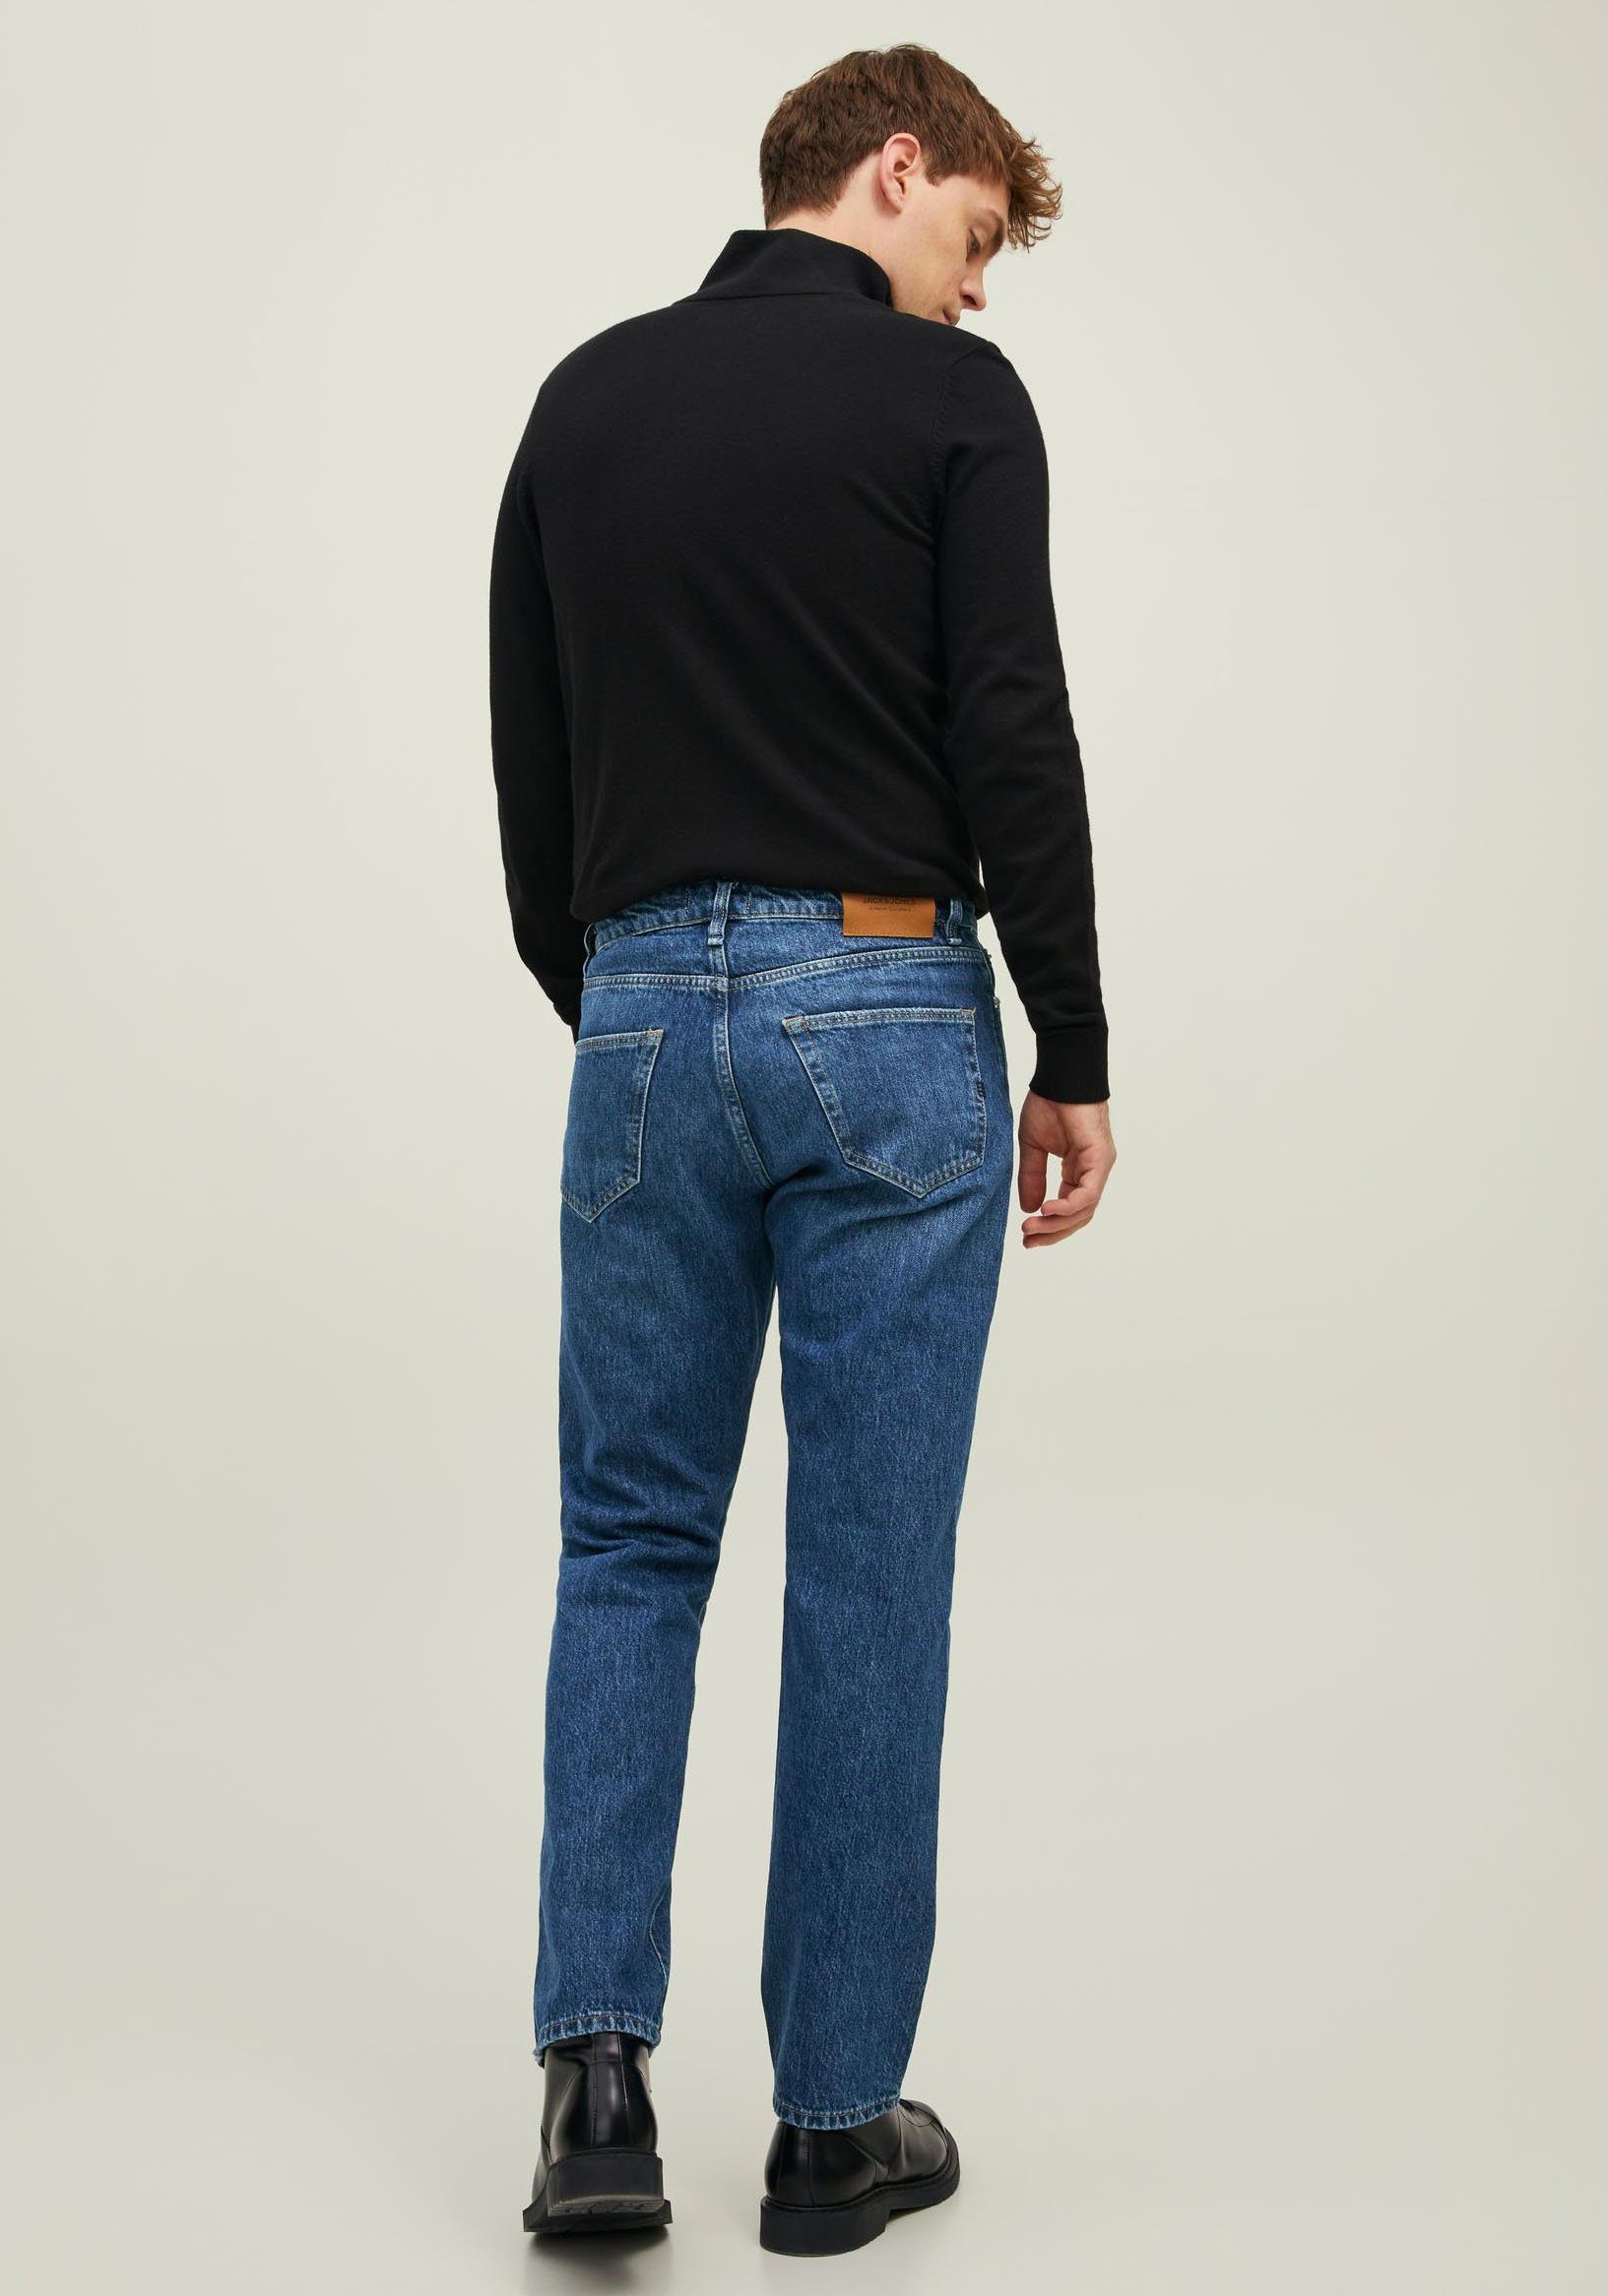 Jack & Jones Loose-fit-Jeans CHRIS COOPER denim mid-blue